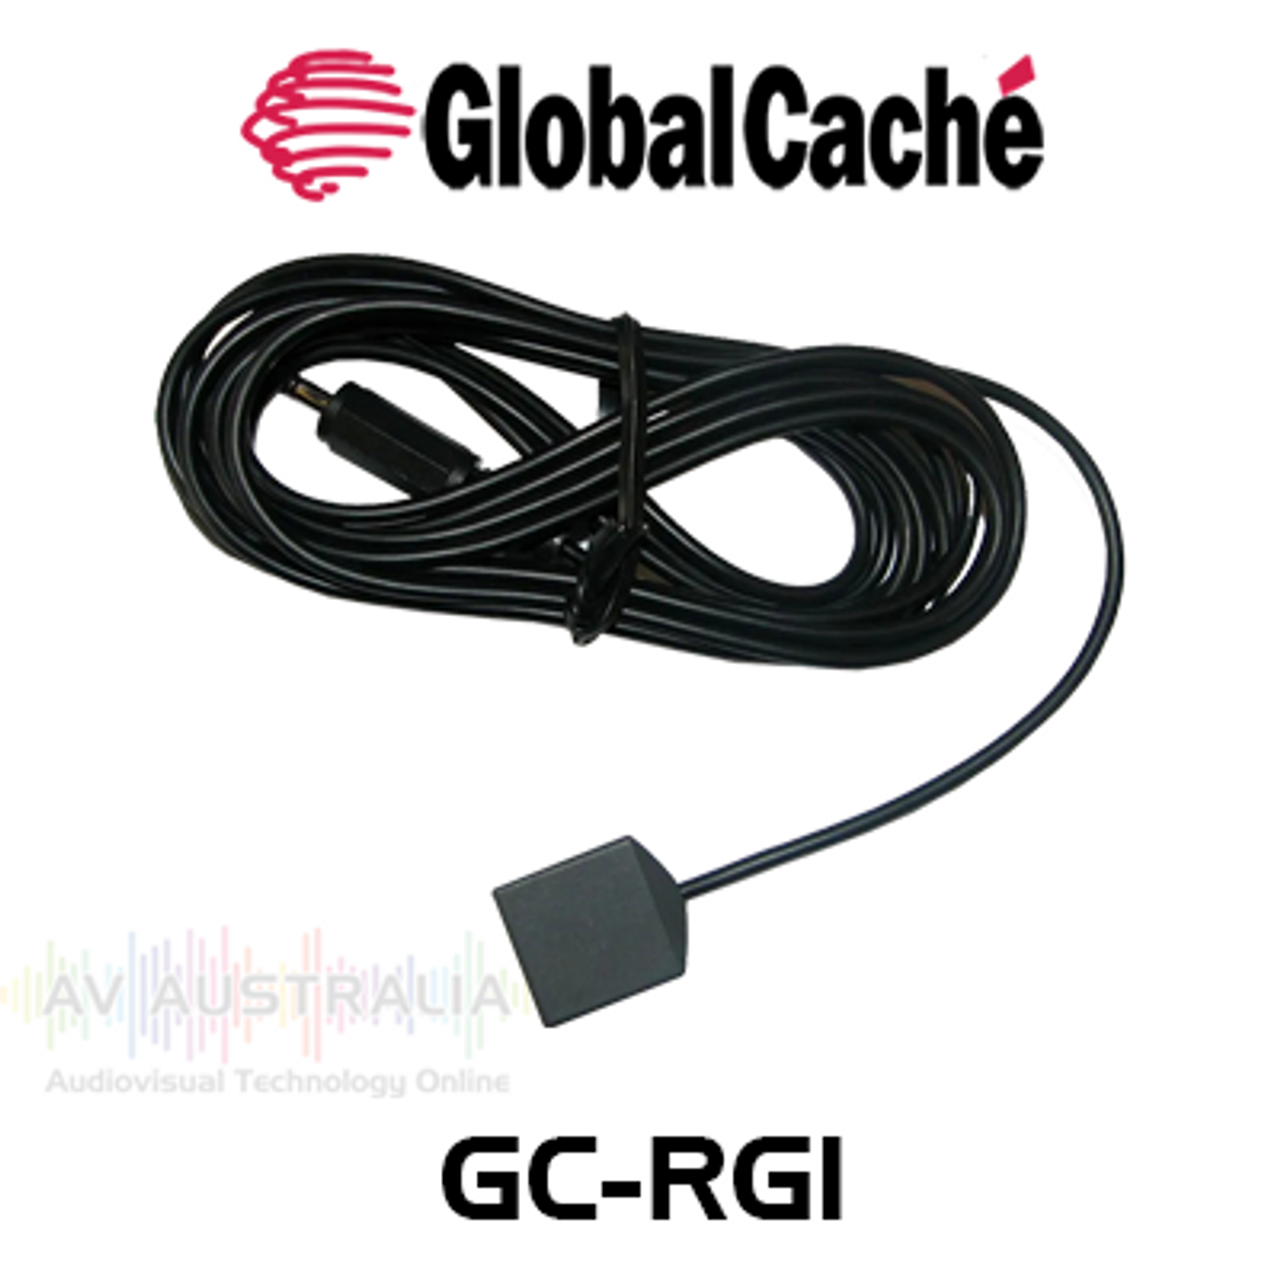 Global Cache GC-RG1 IR Receiver